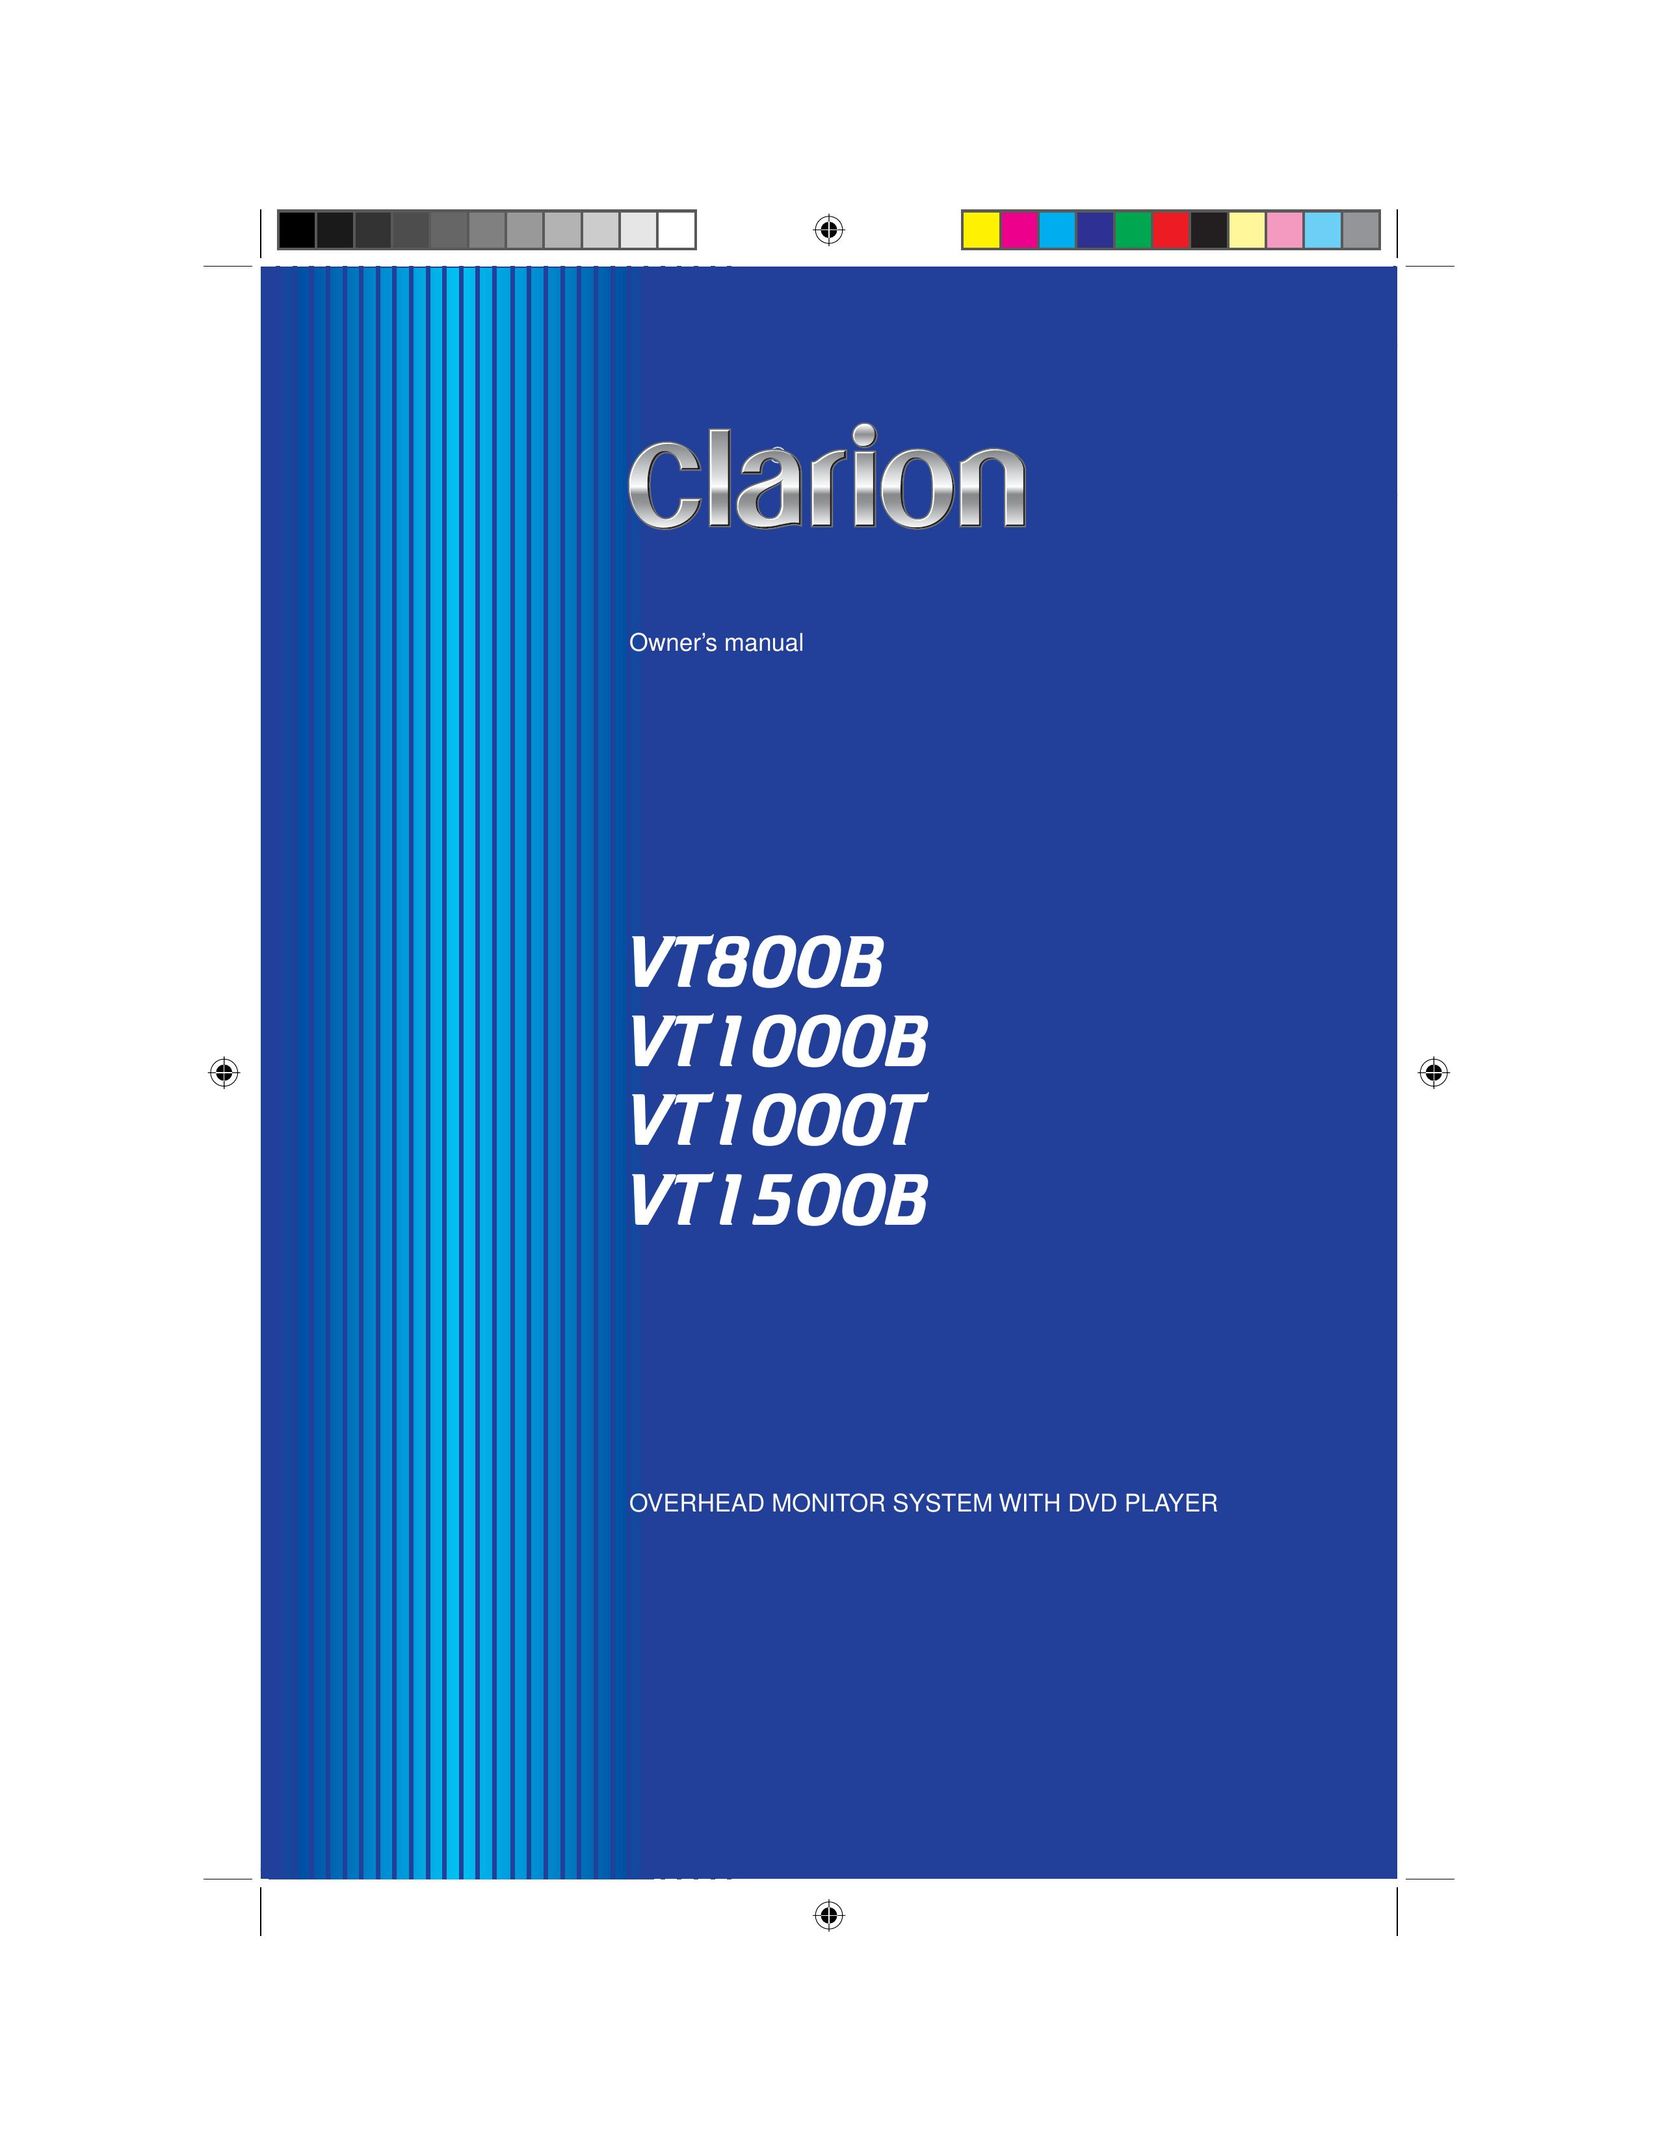 Clarion VT1500B Car Video System User Manual